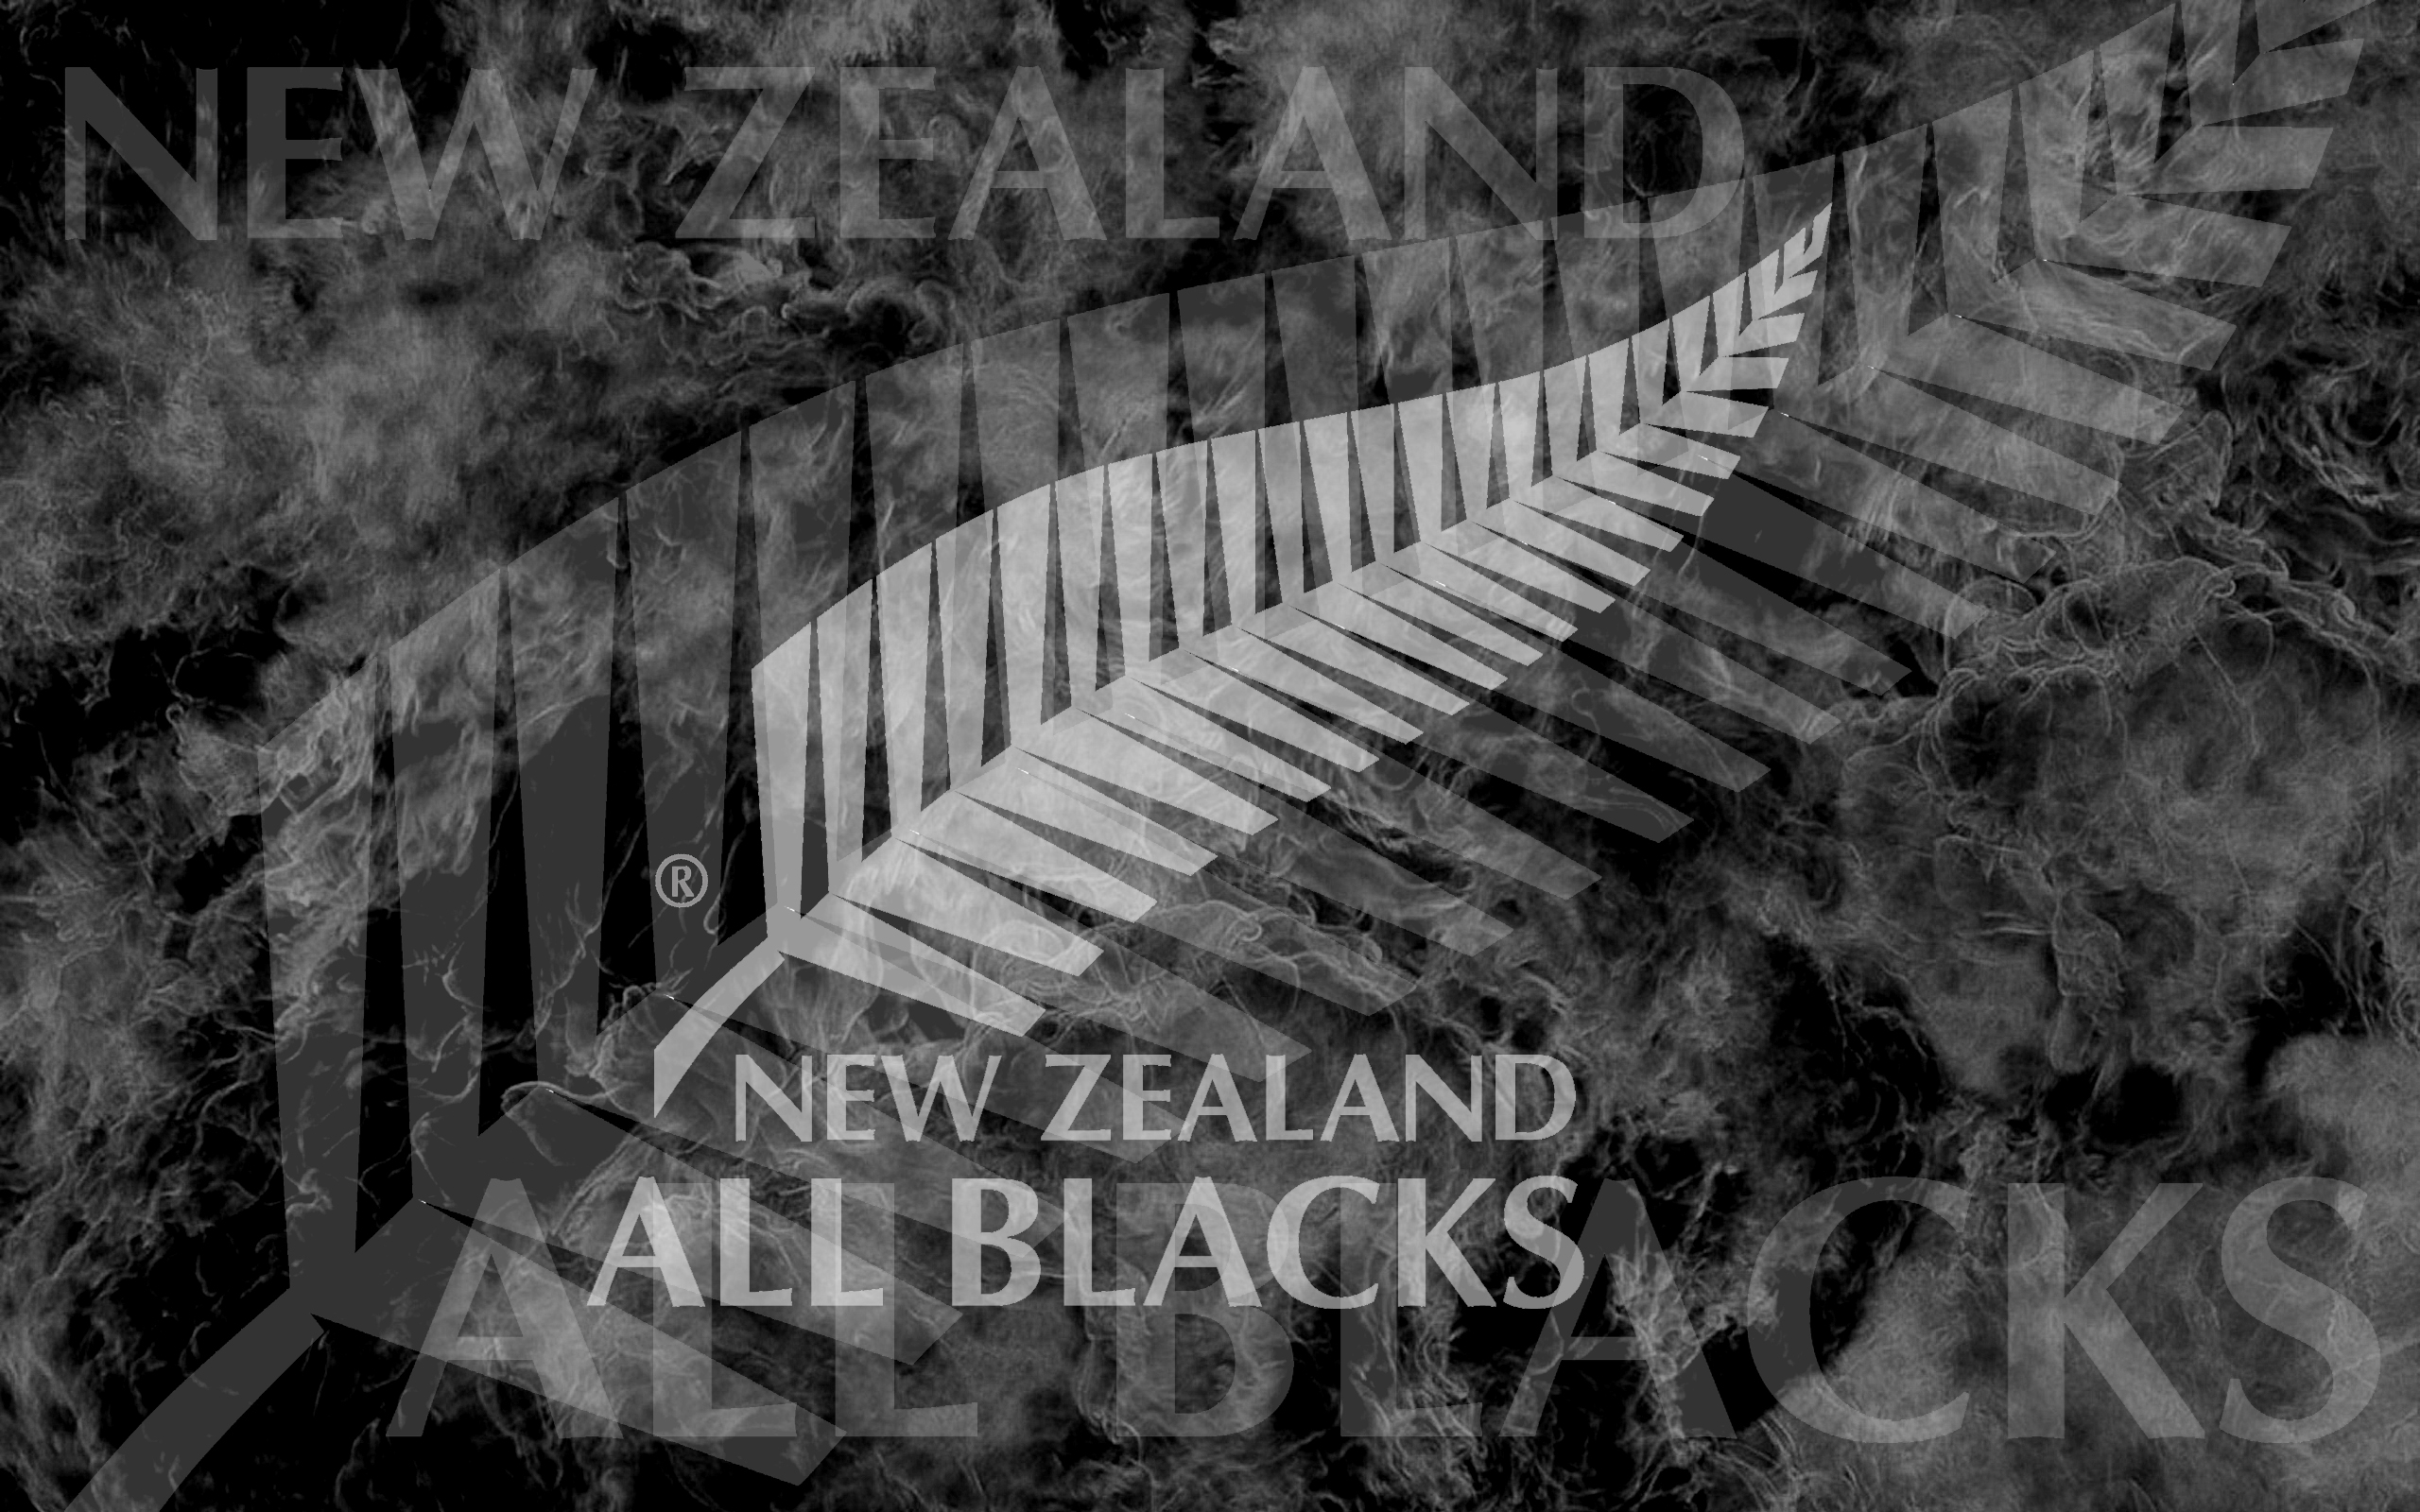 Free New Zealand All Black Rugby Hd Backgrounds Pixelstalk Net